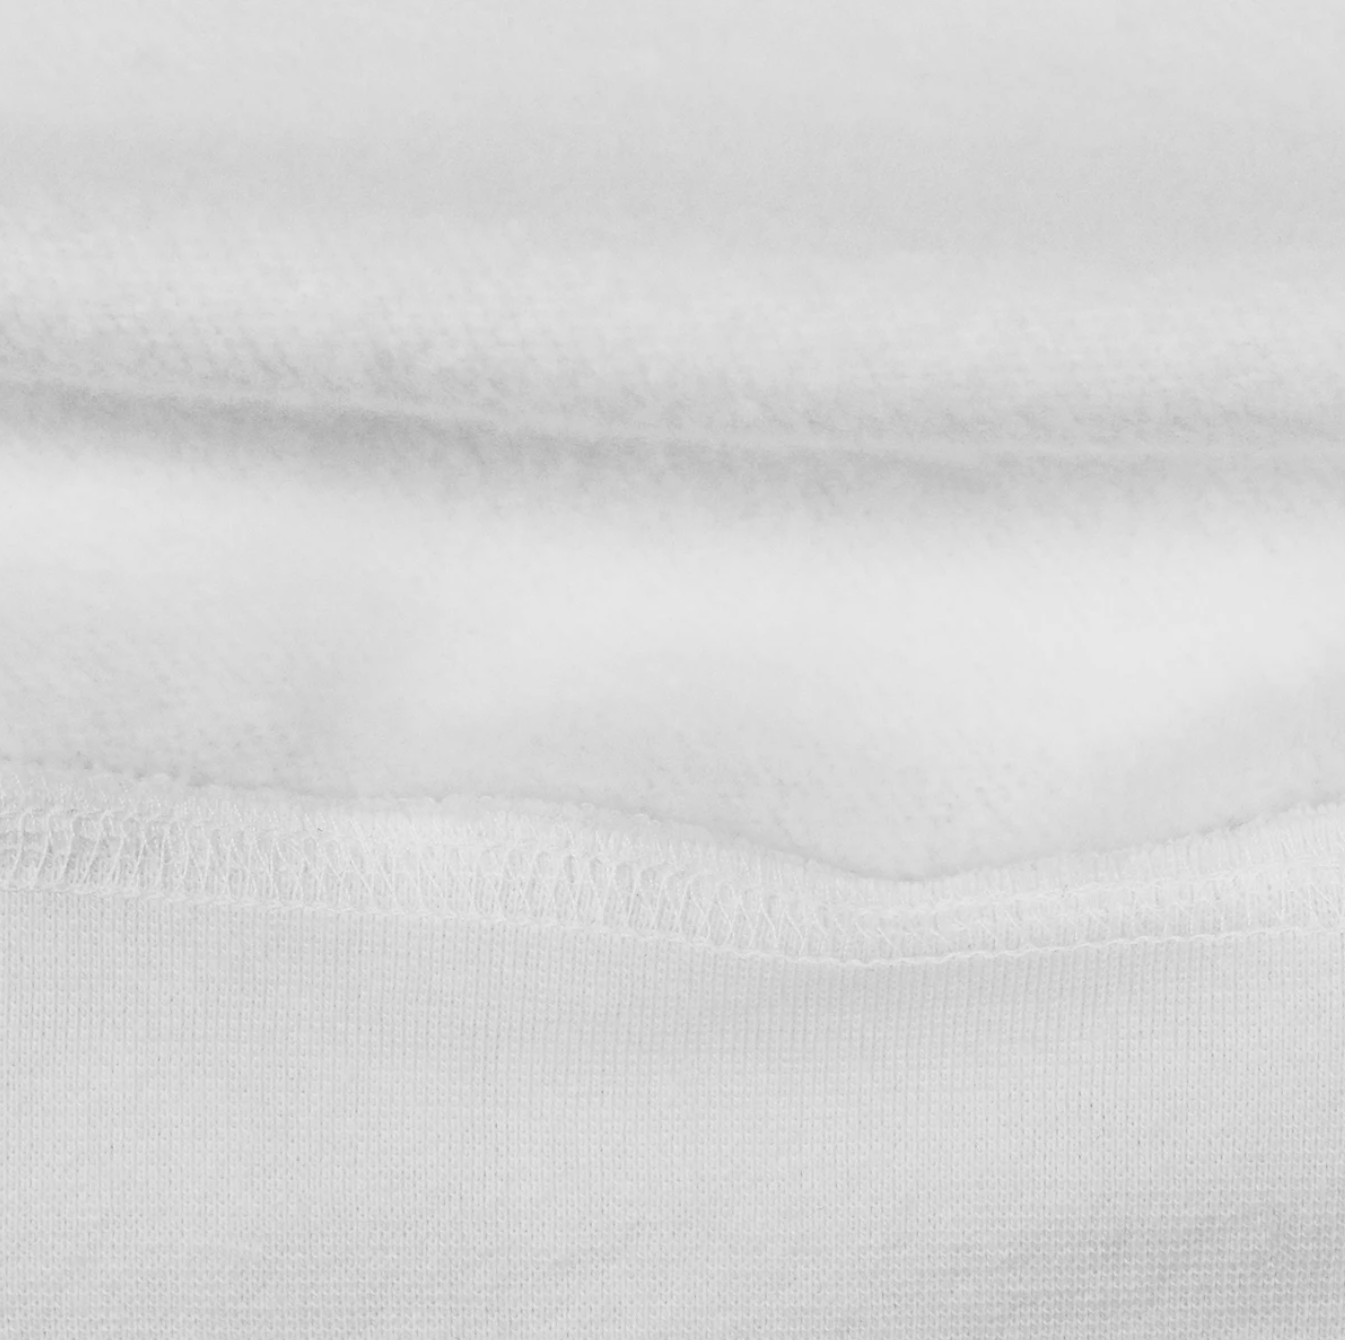 Inside fabric close up